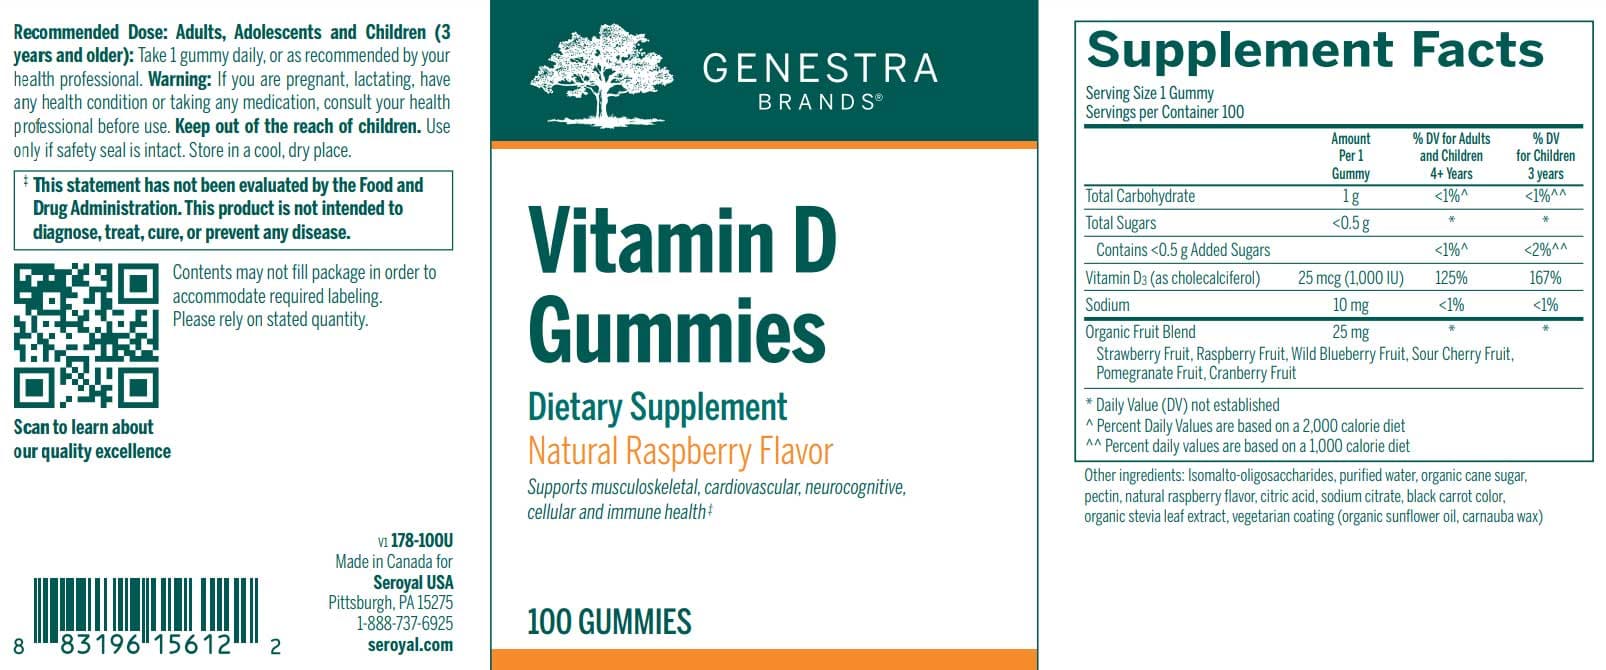 Genestra Brands Vitamin D Gummies Label